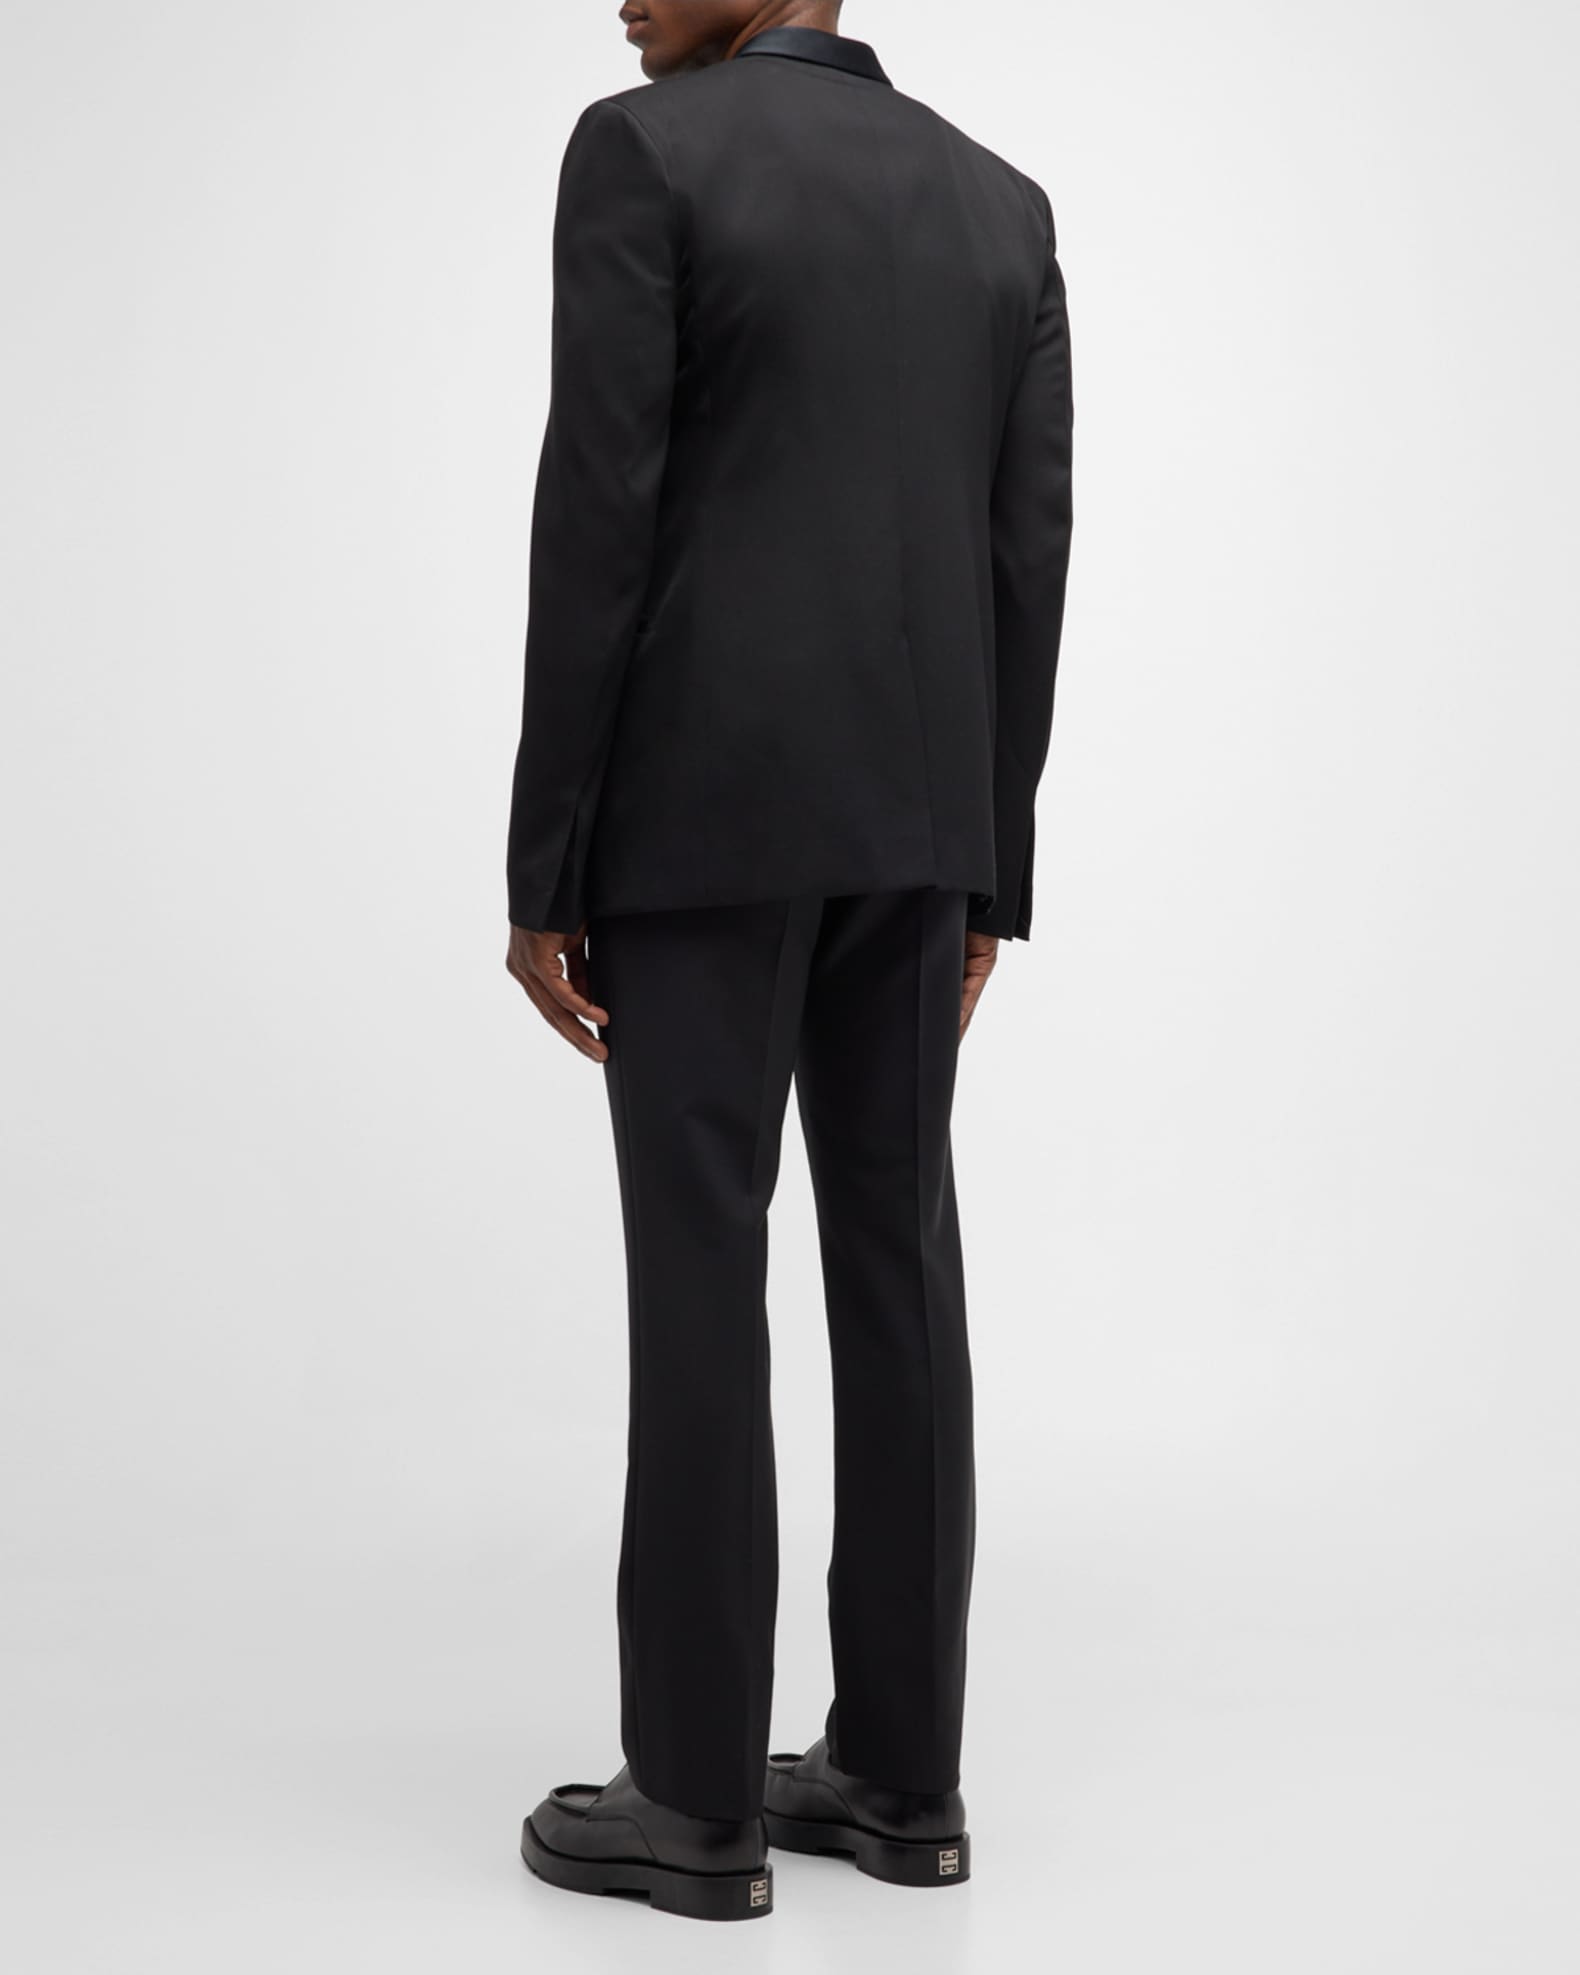 Givenchy Men's Wool Tuxedo Jacket | Neiman Marcus